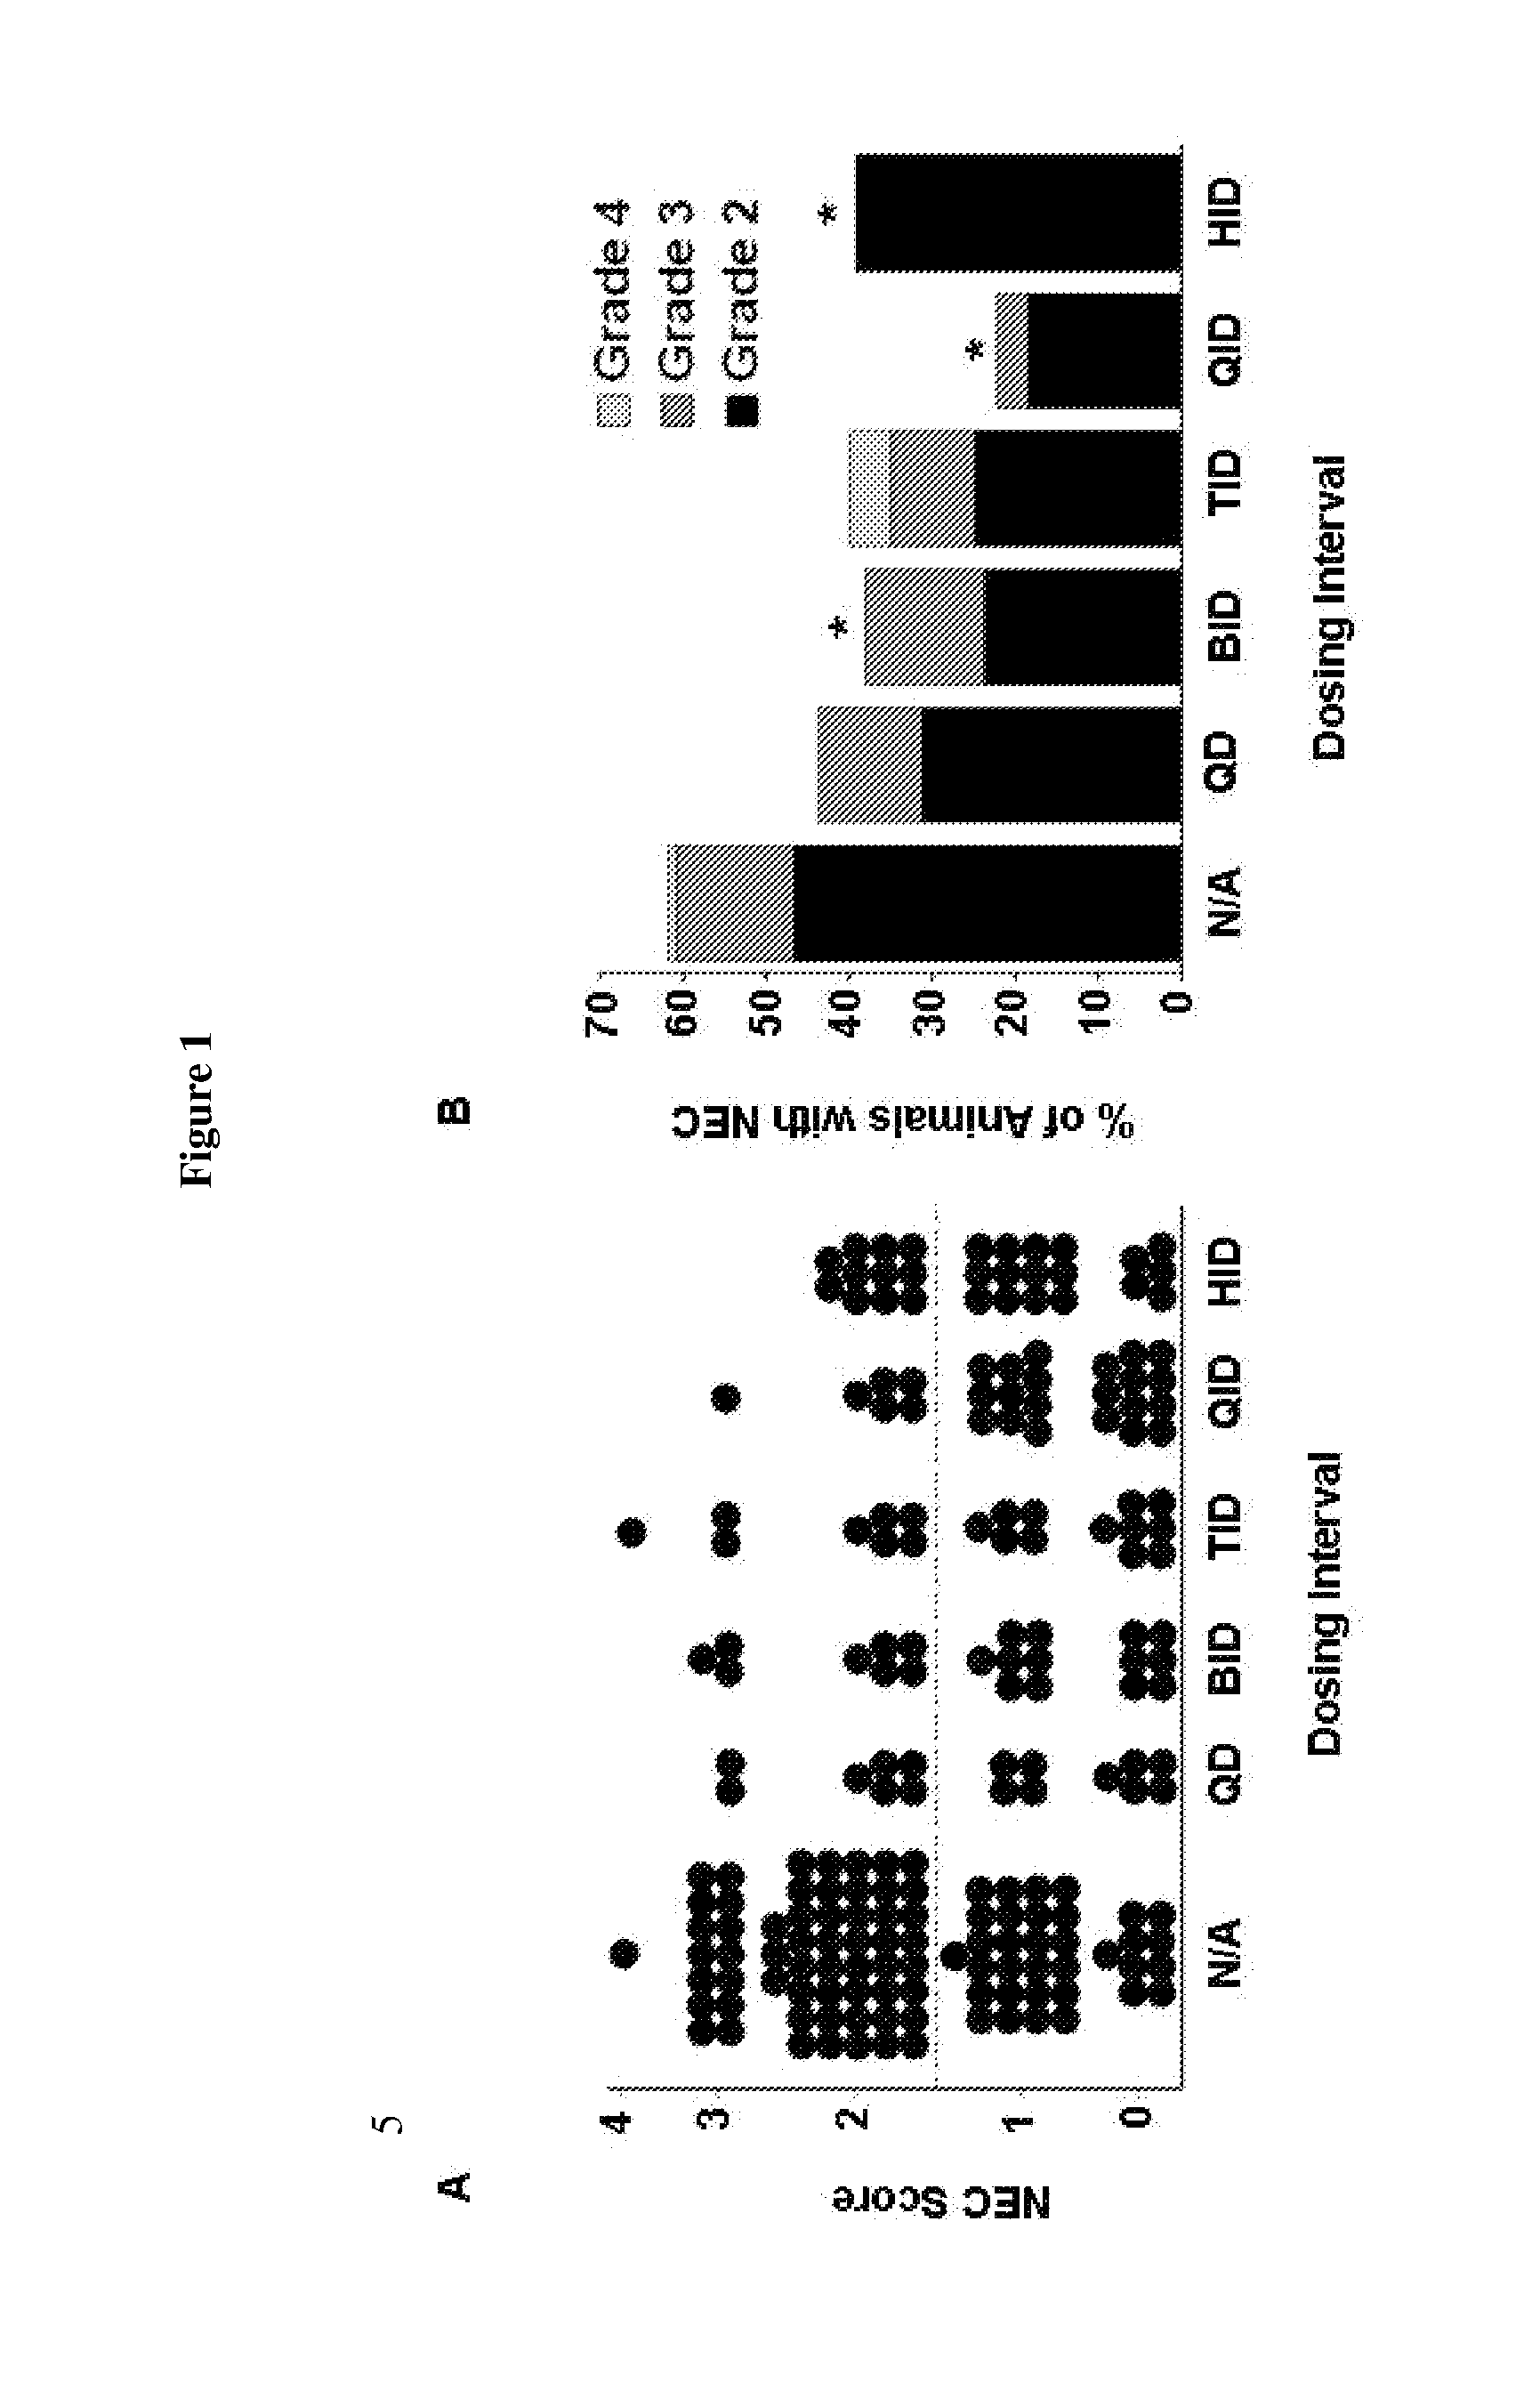 Methods of treating necrotizing enterocolitis using heparin binding epidermal growth factor (hb-egf)